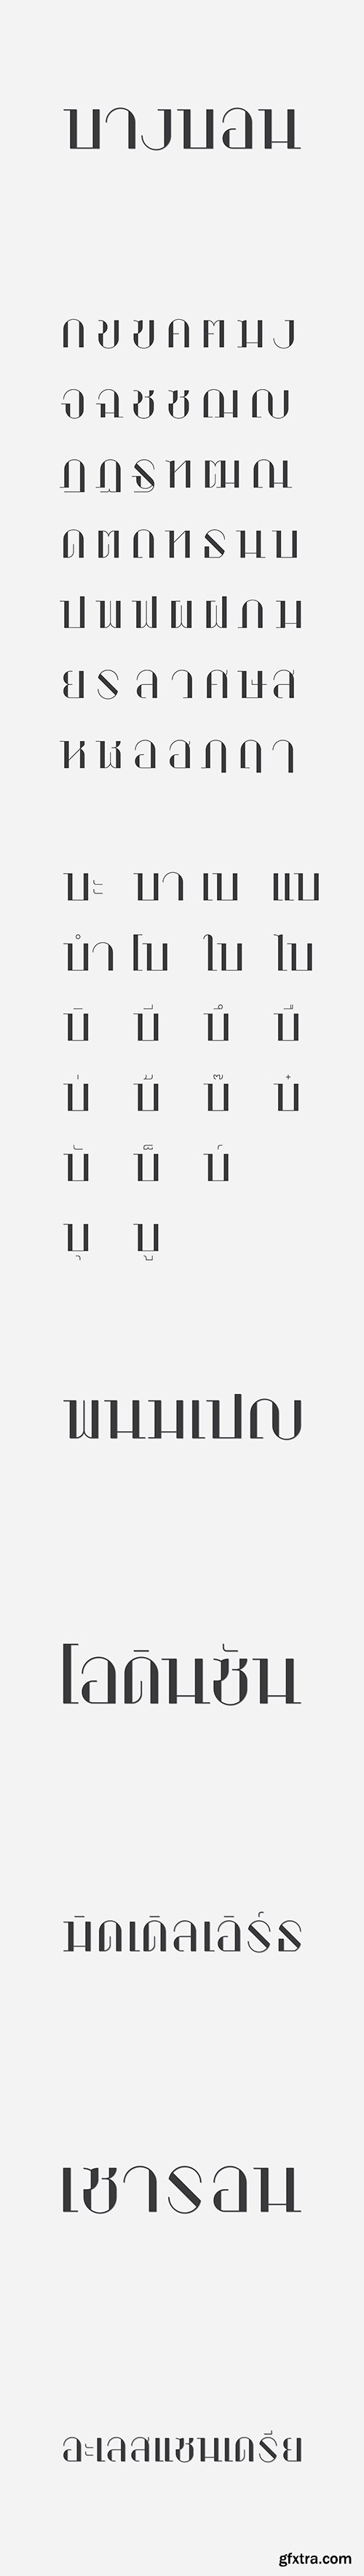 Bangbon Typeface